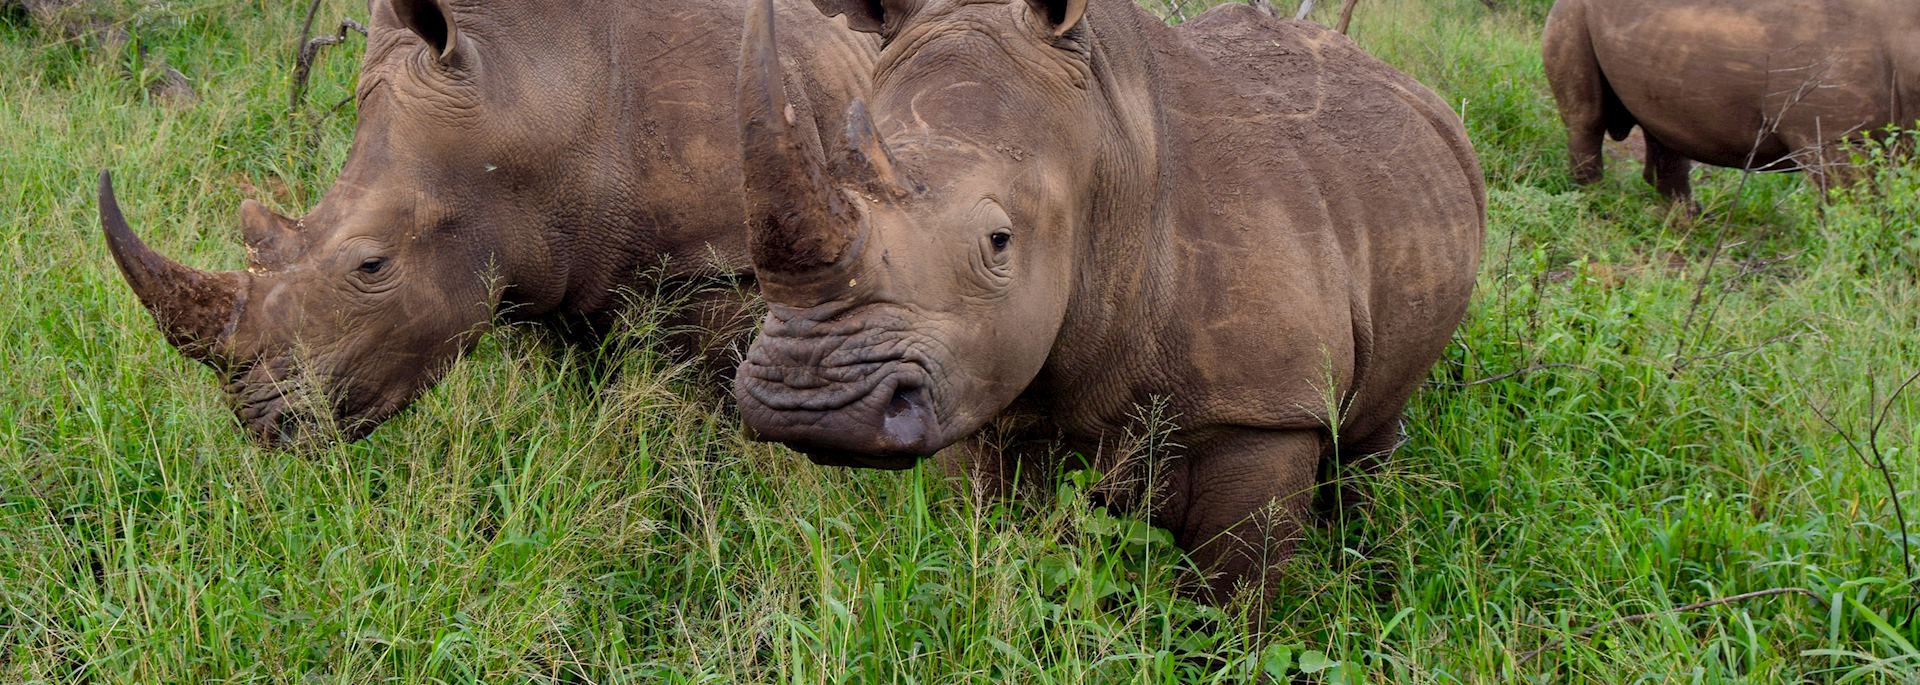 White rhino at Thanda Safari Private Game Reserve